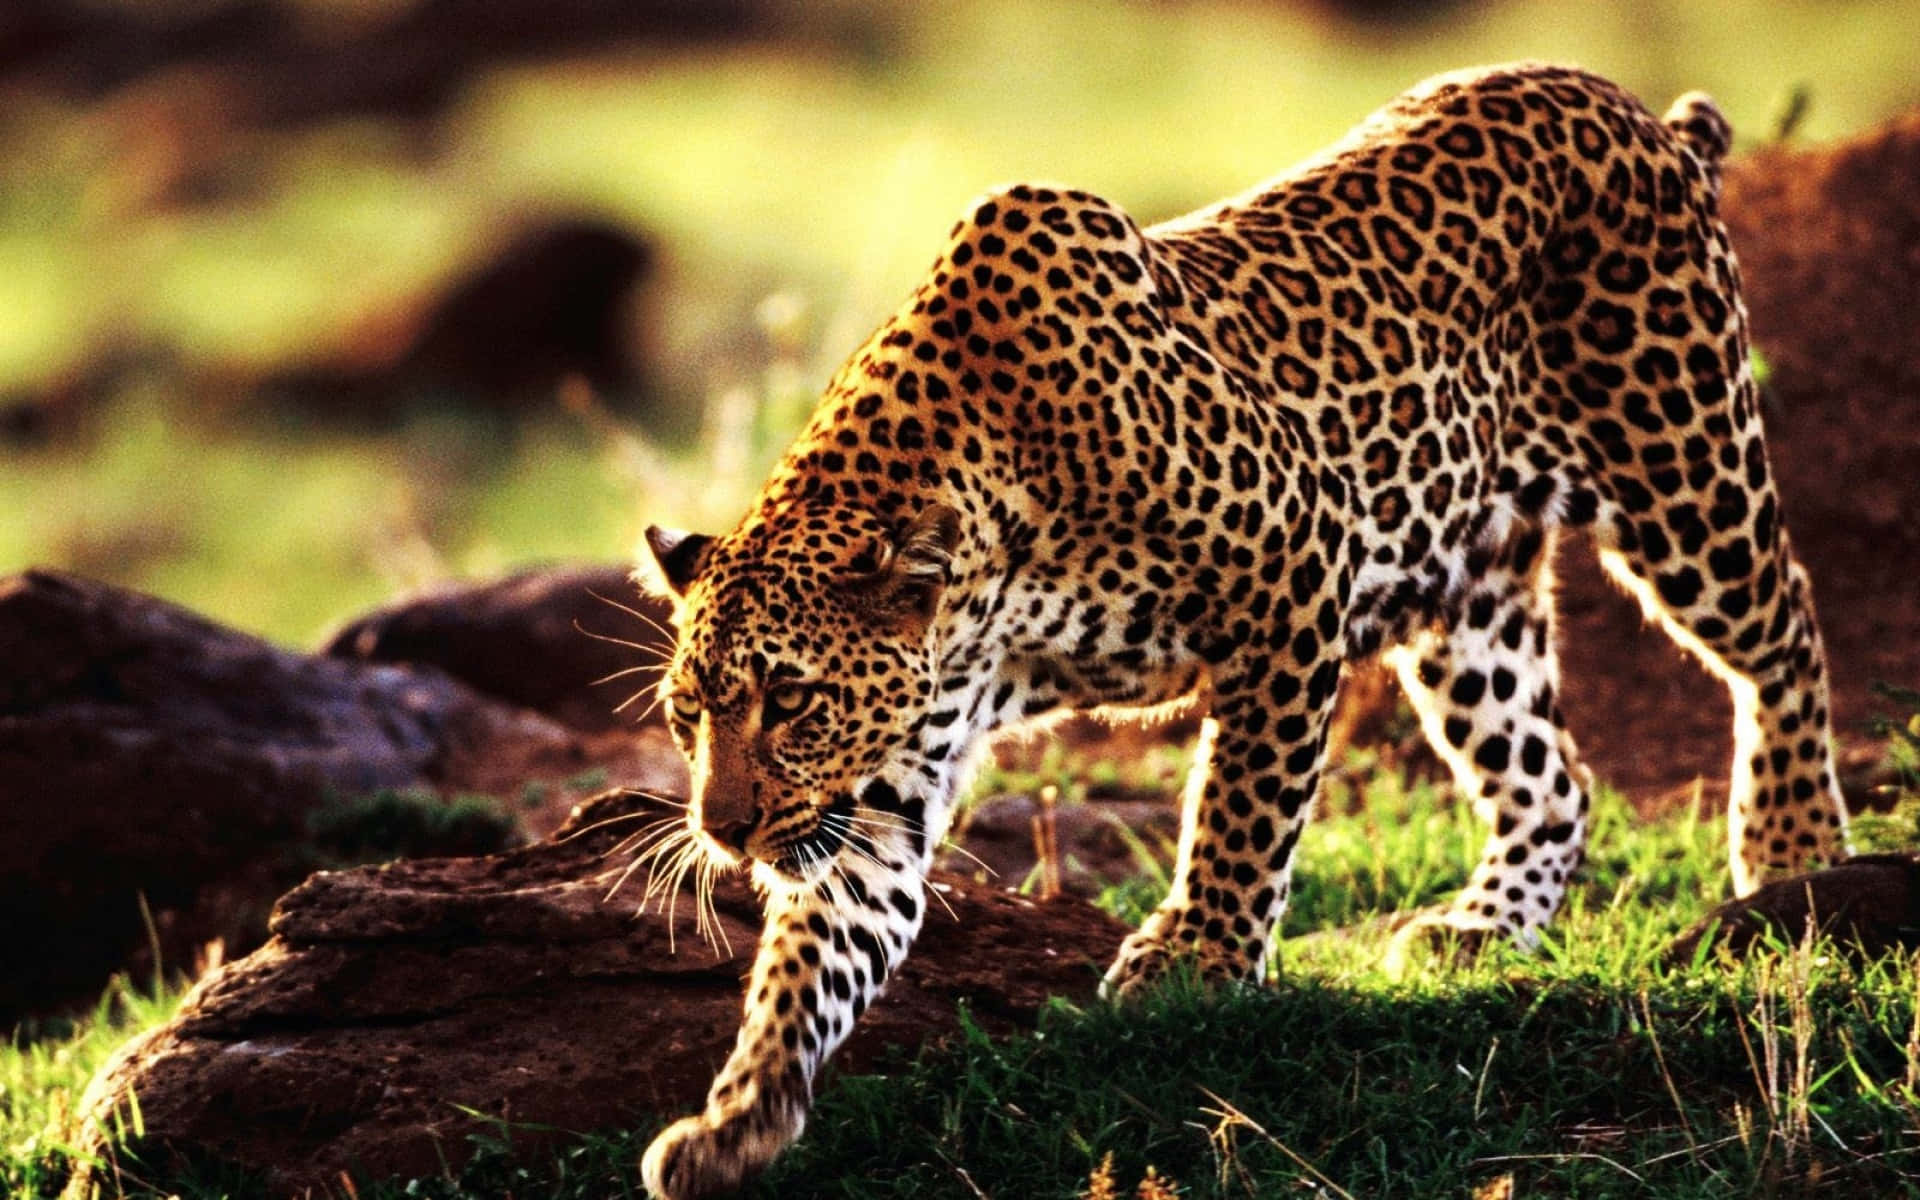 A Close Look At A Cheetah In Its Natural Habitat Wallpaper